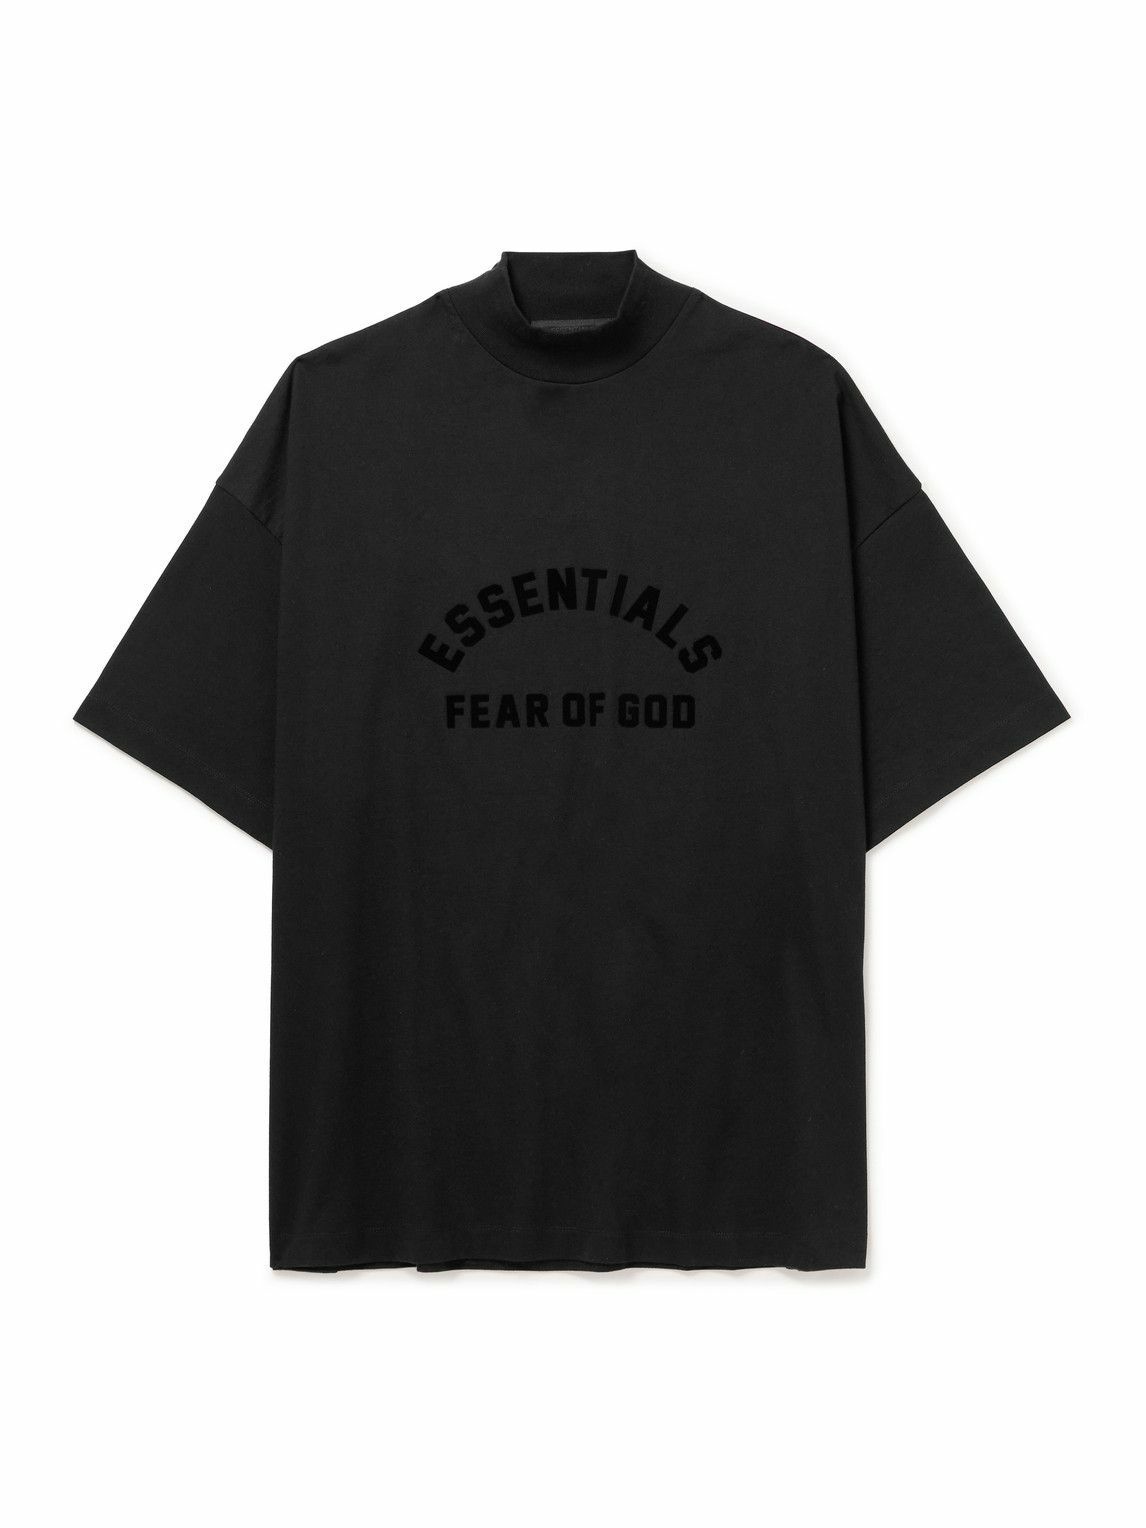 FEAR OF GOD ESSENTIALS - Logo-Appliquéd Cotton-Jersey Mock-Neck T